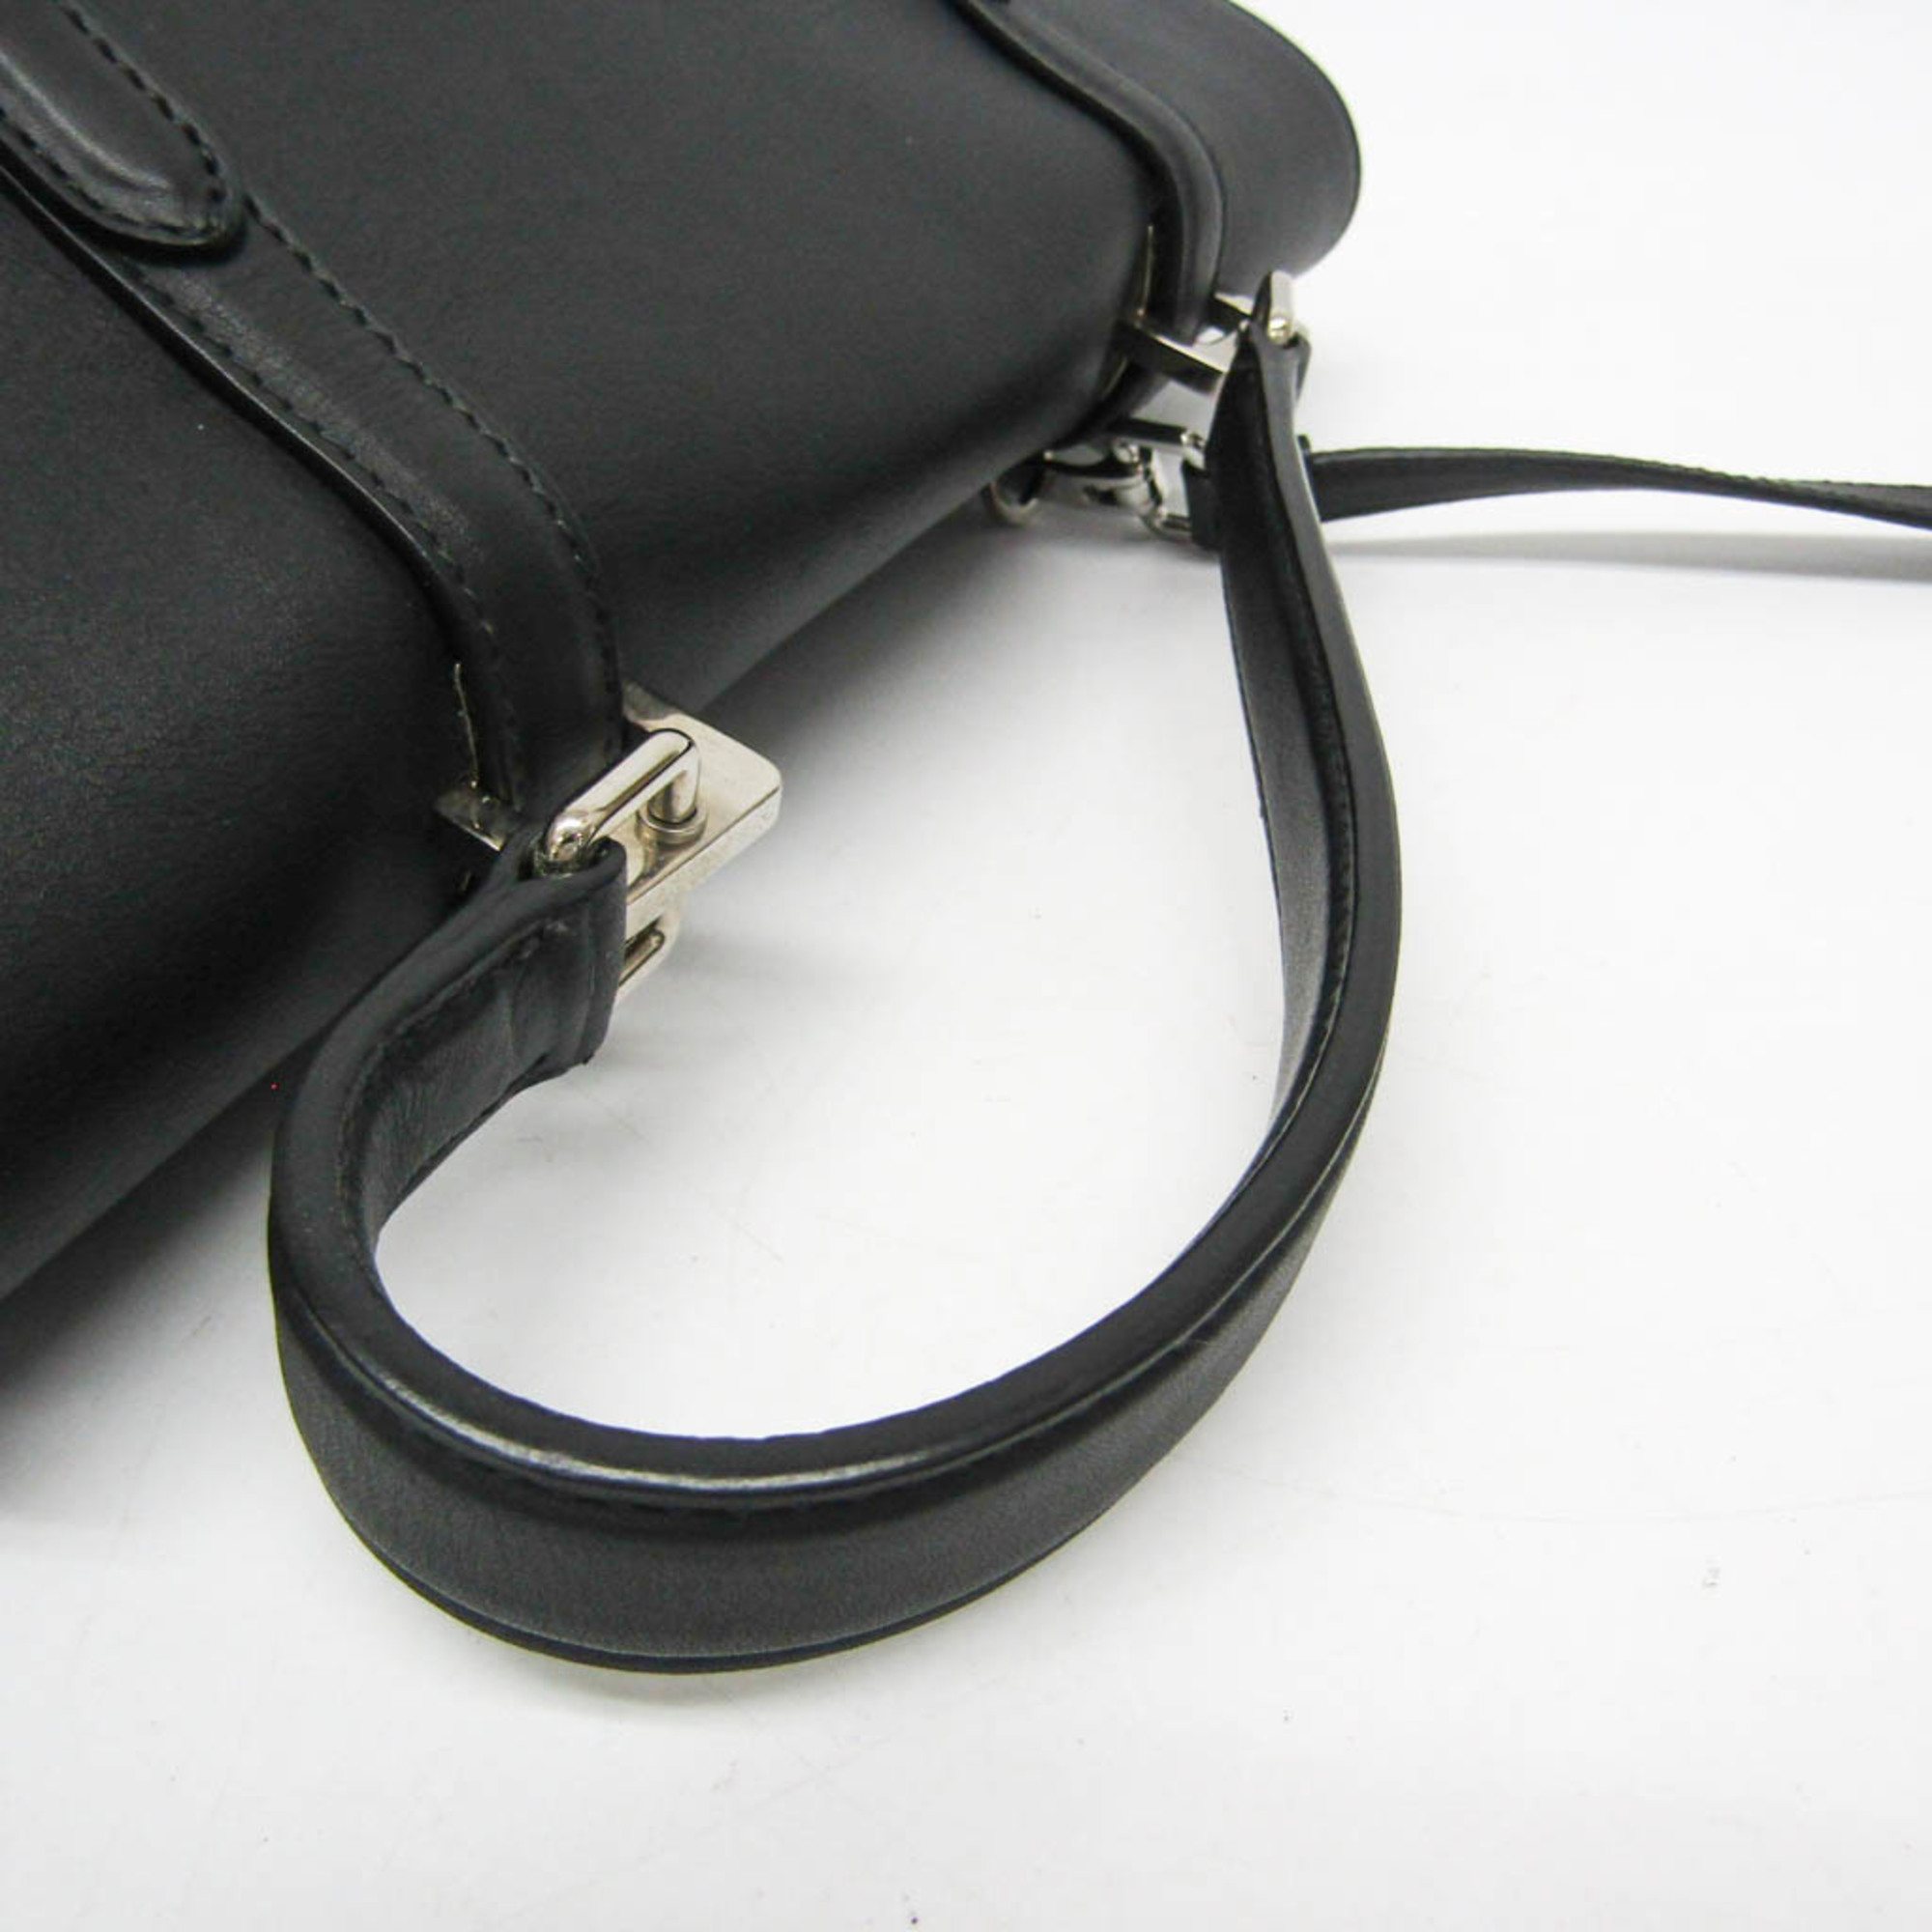 Prada Women's Leather Handbag,Shoulder Bag Black